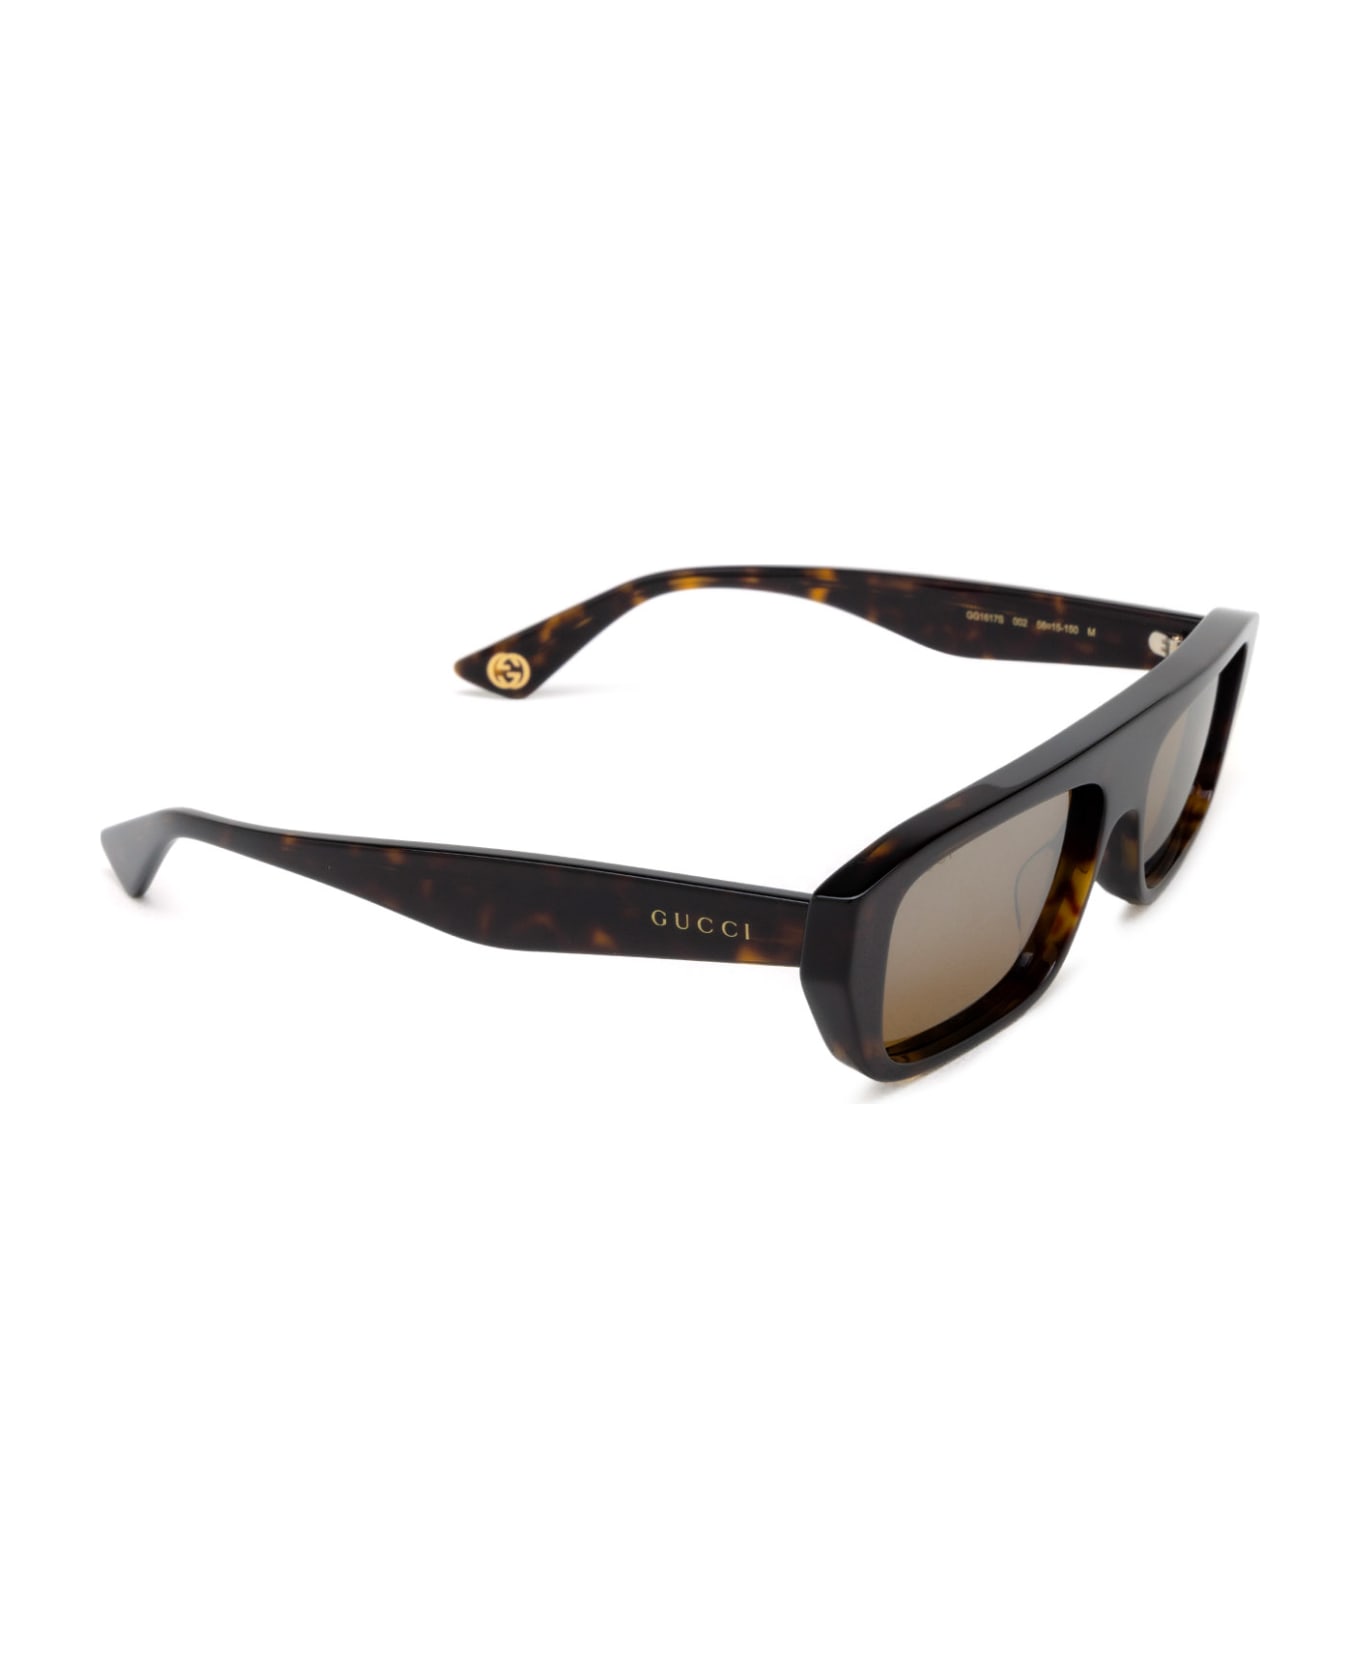 Gucci Eyewear Gg1617s Havana Sunglasses - Havana